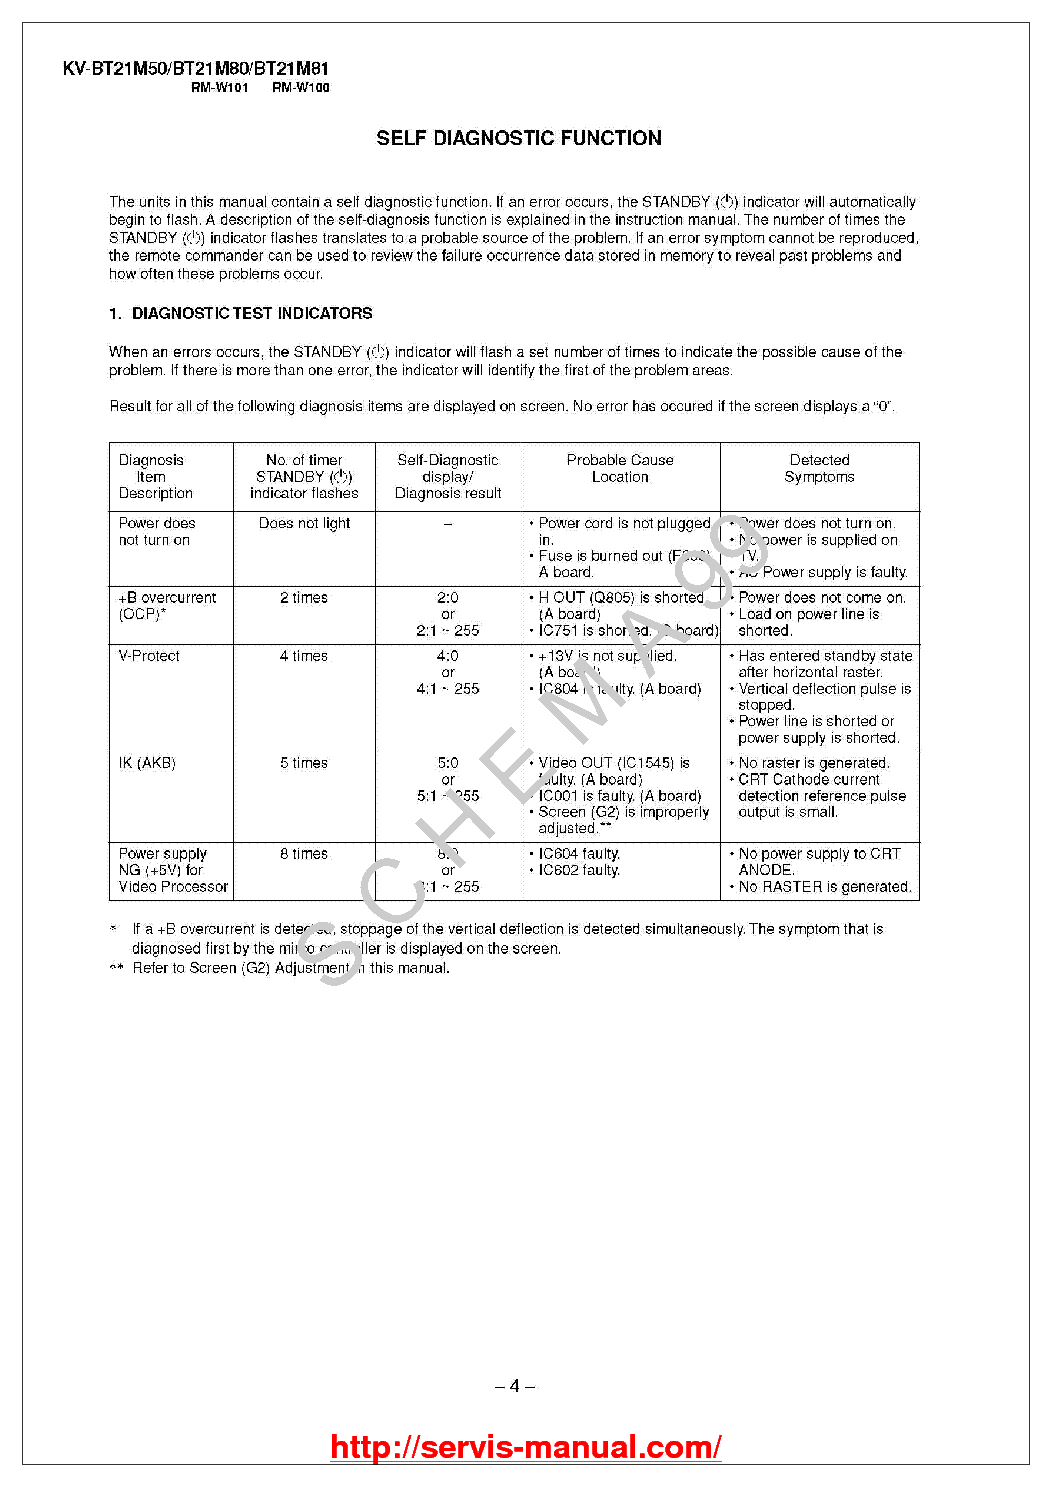 SONY KV-BT21M50 service manual (1st page)